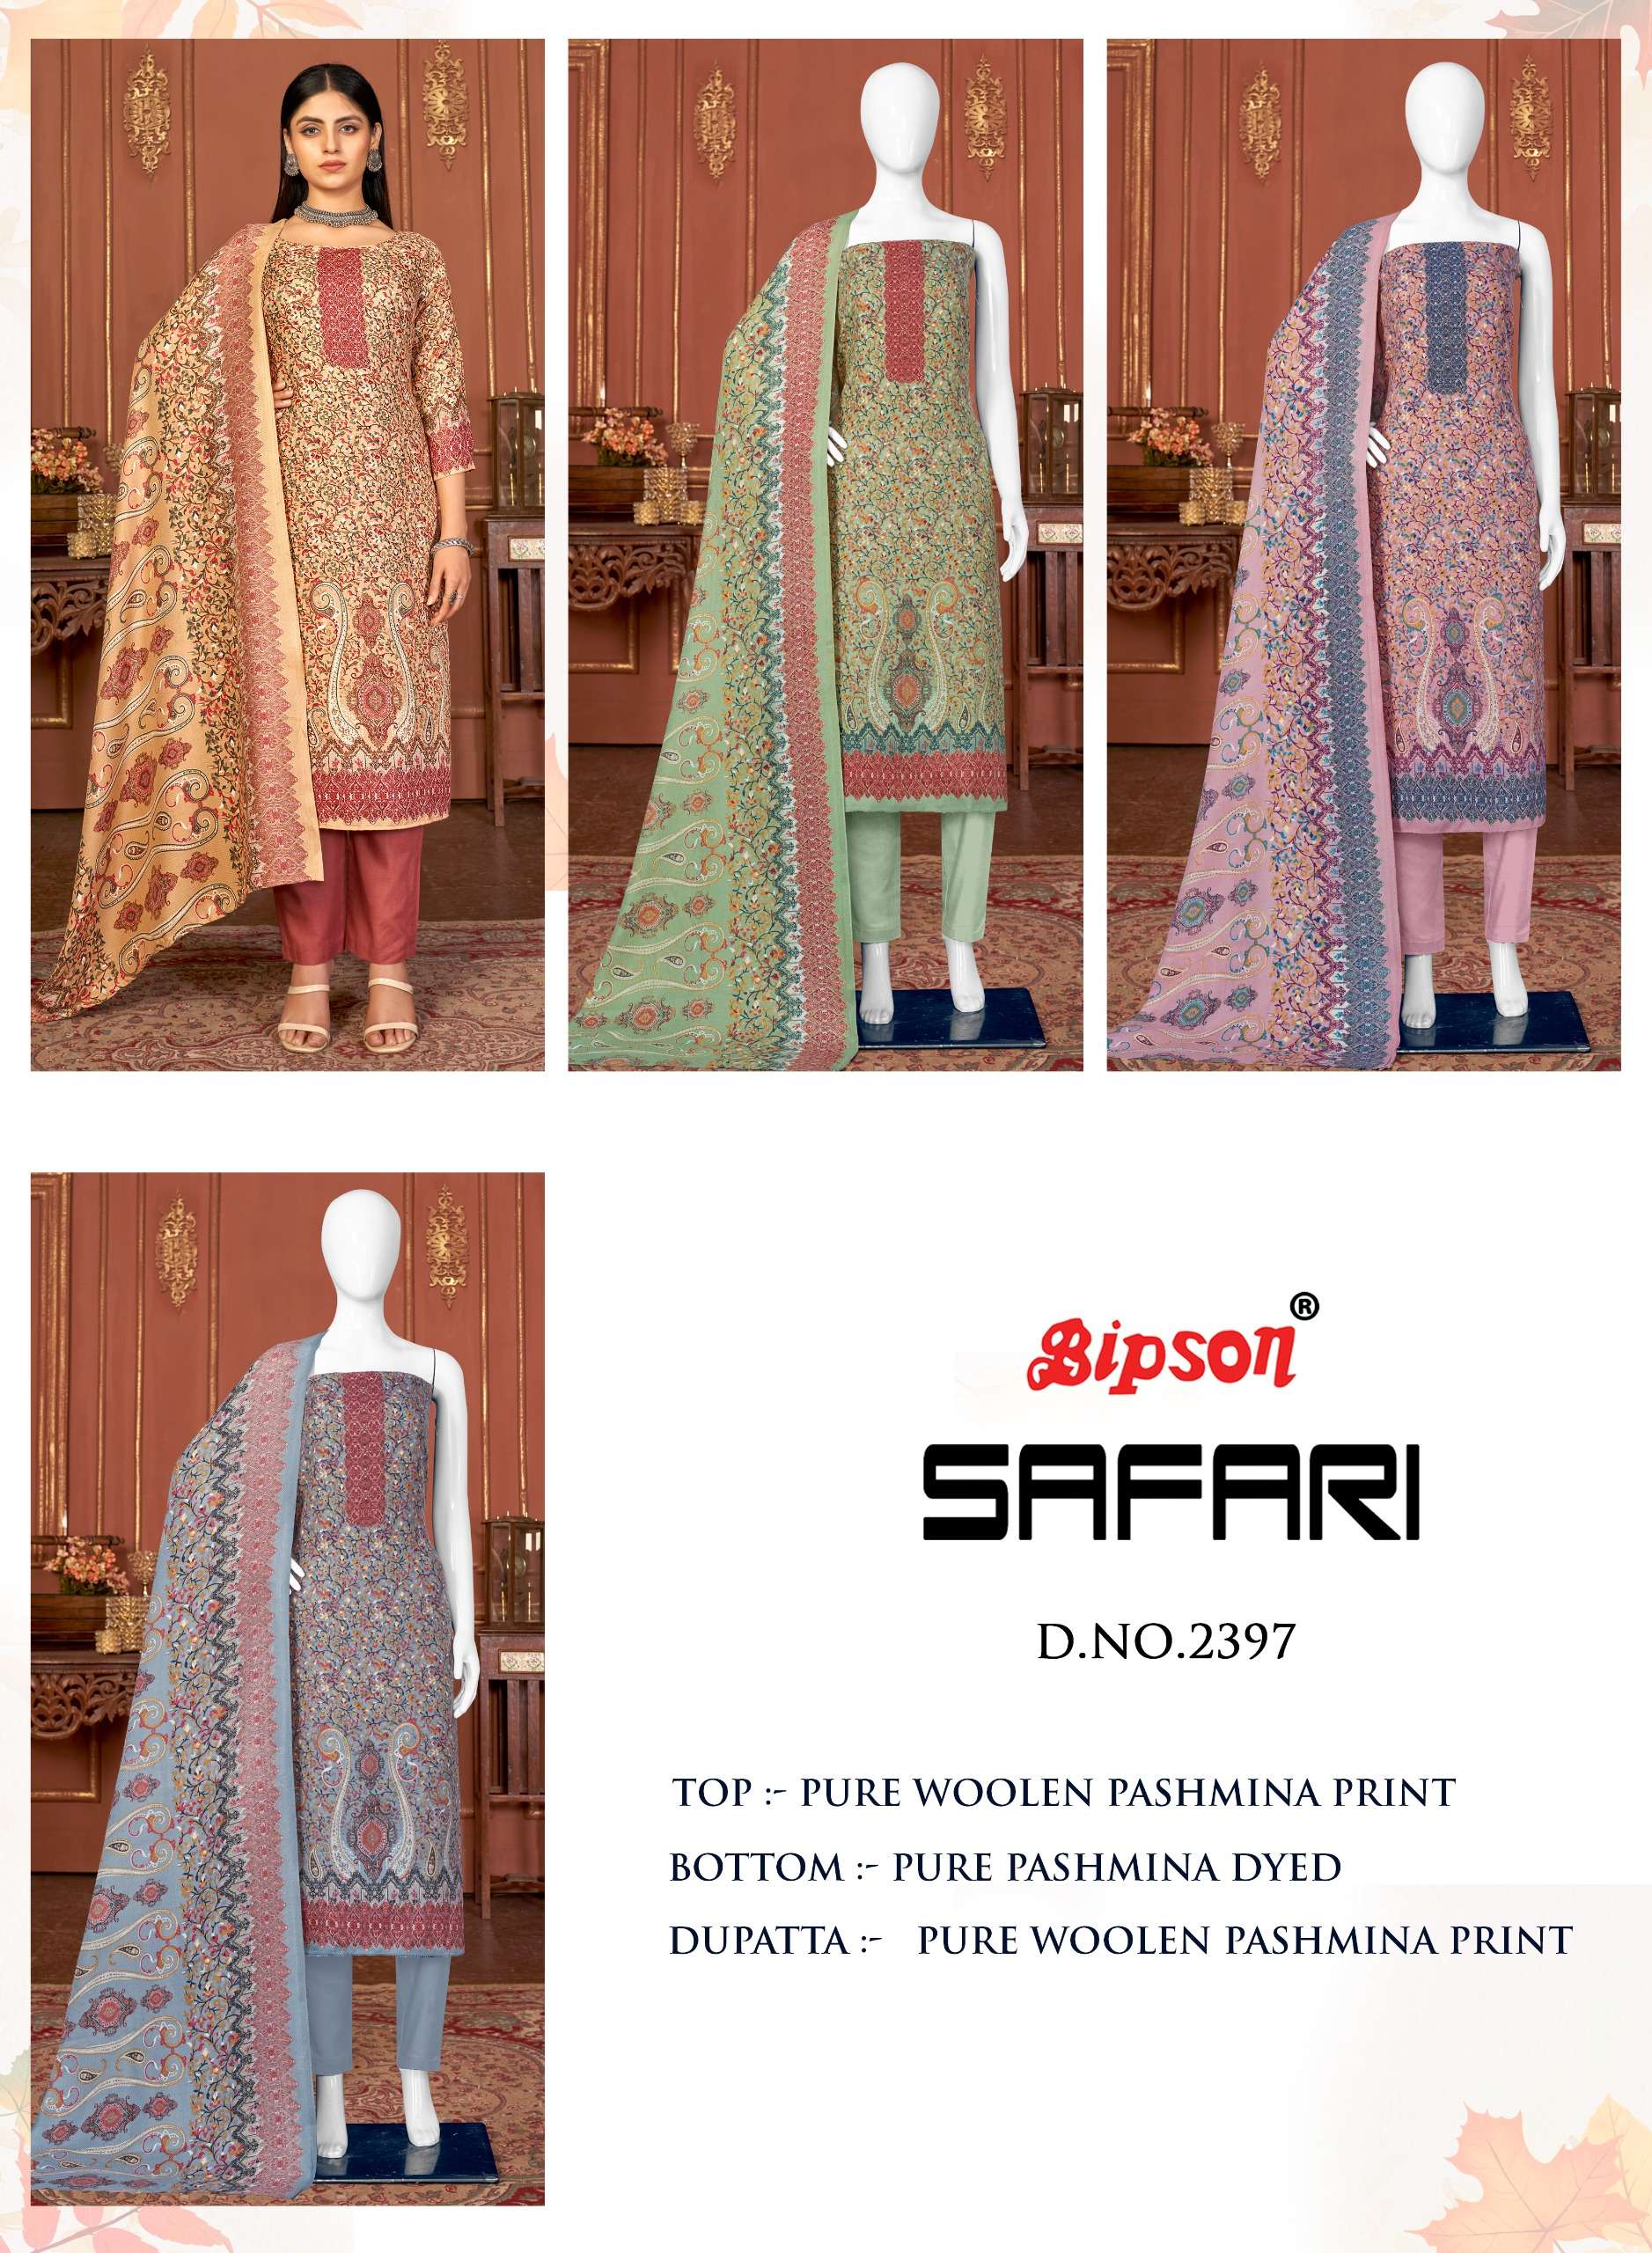 bipson safari 2397 colour series latest pakistani salwar kameez wholesaler surat gujarat